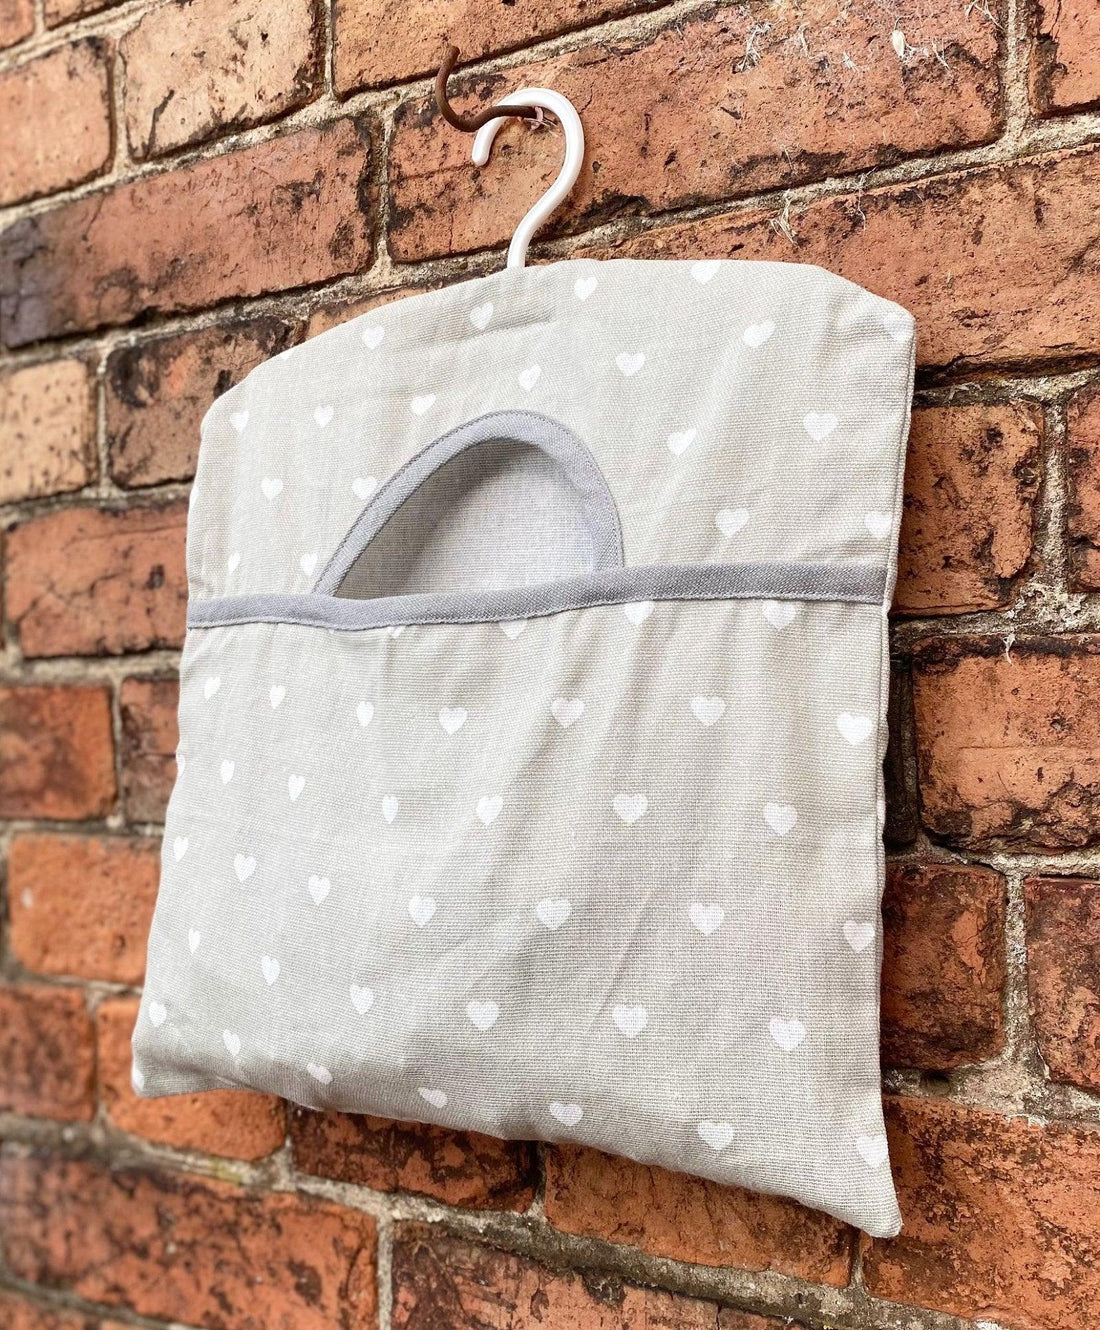 Cotton Peg Bag With Grey Hearts Design - £12.99 - Decorative Kitchen Items 